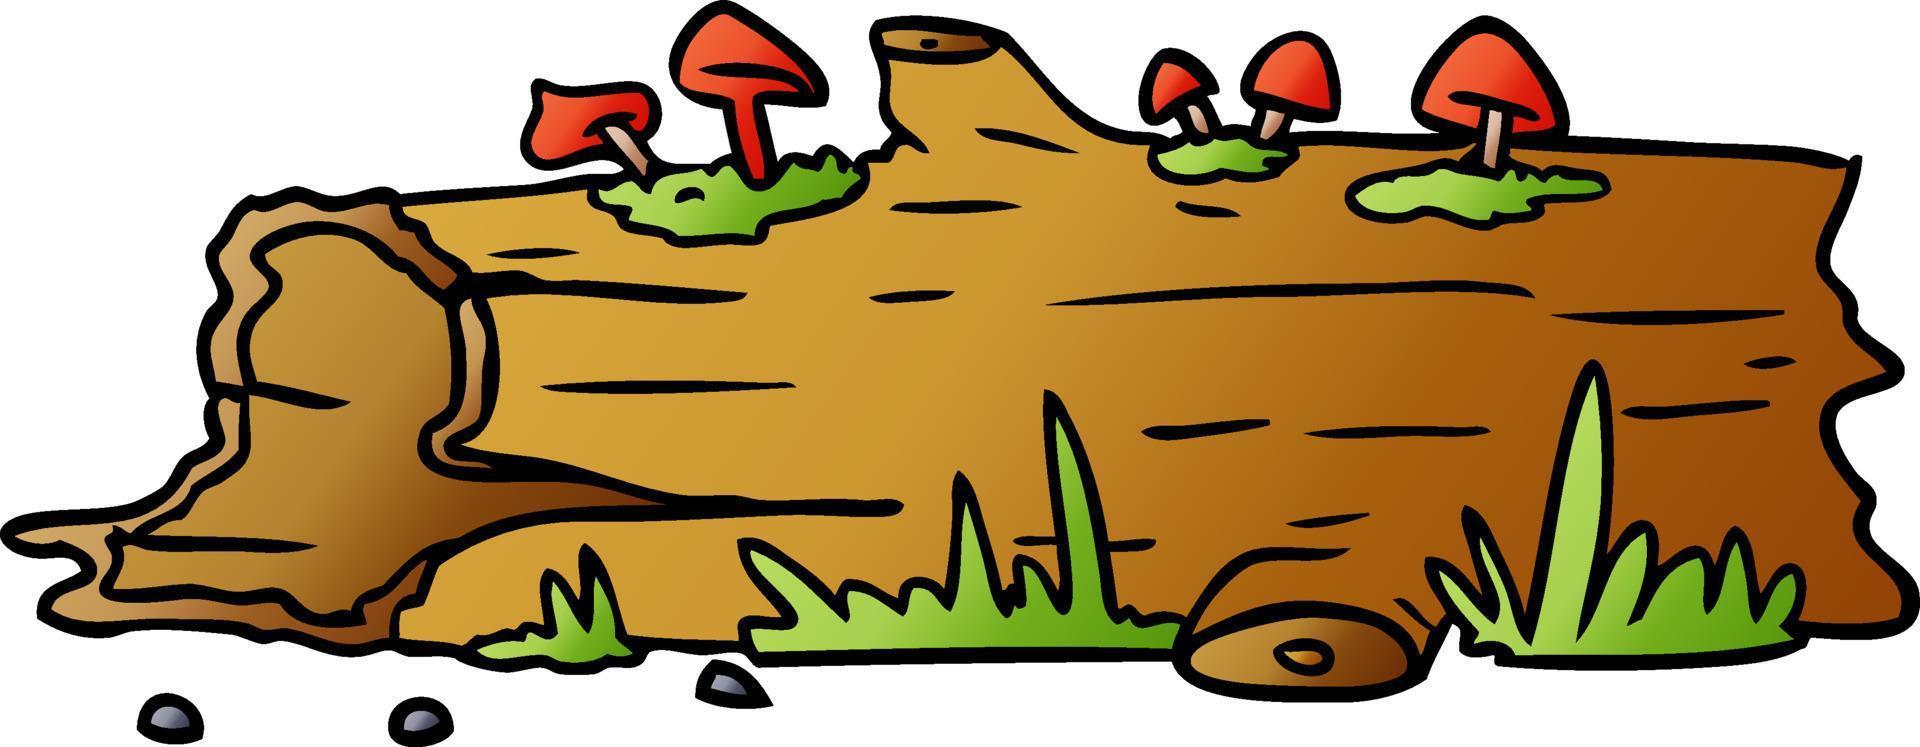 gradient cartoon doodle of a tree log vector